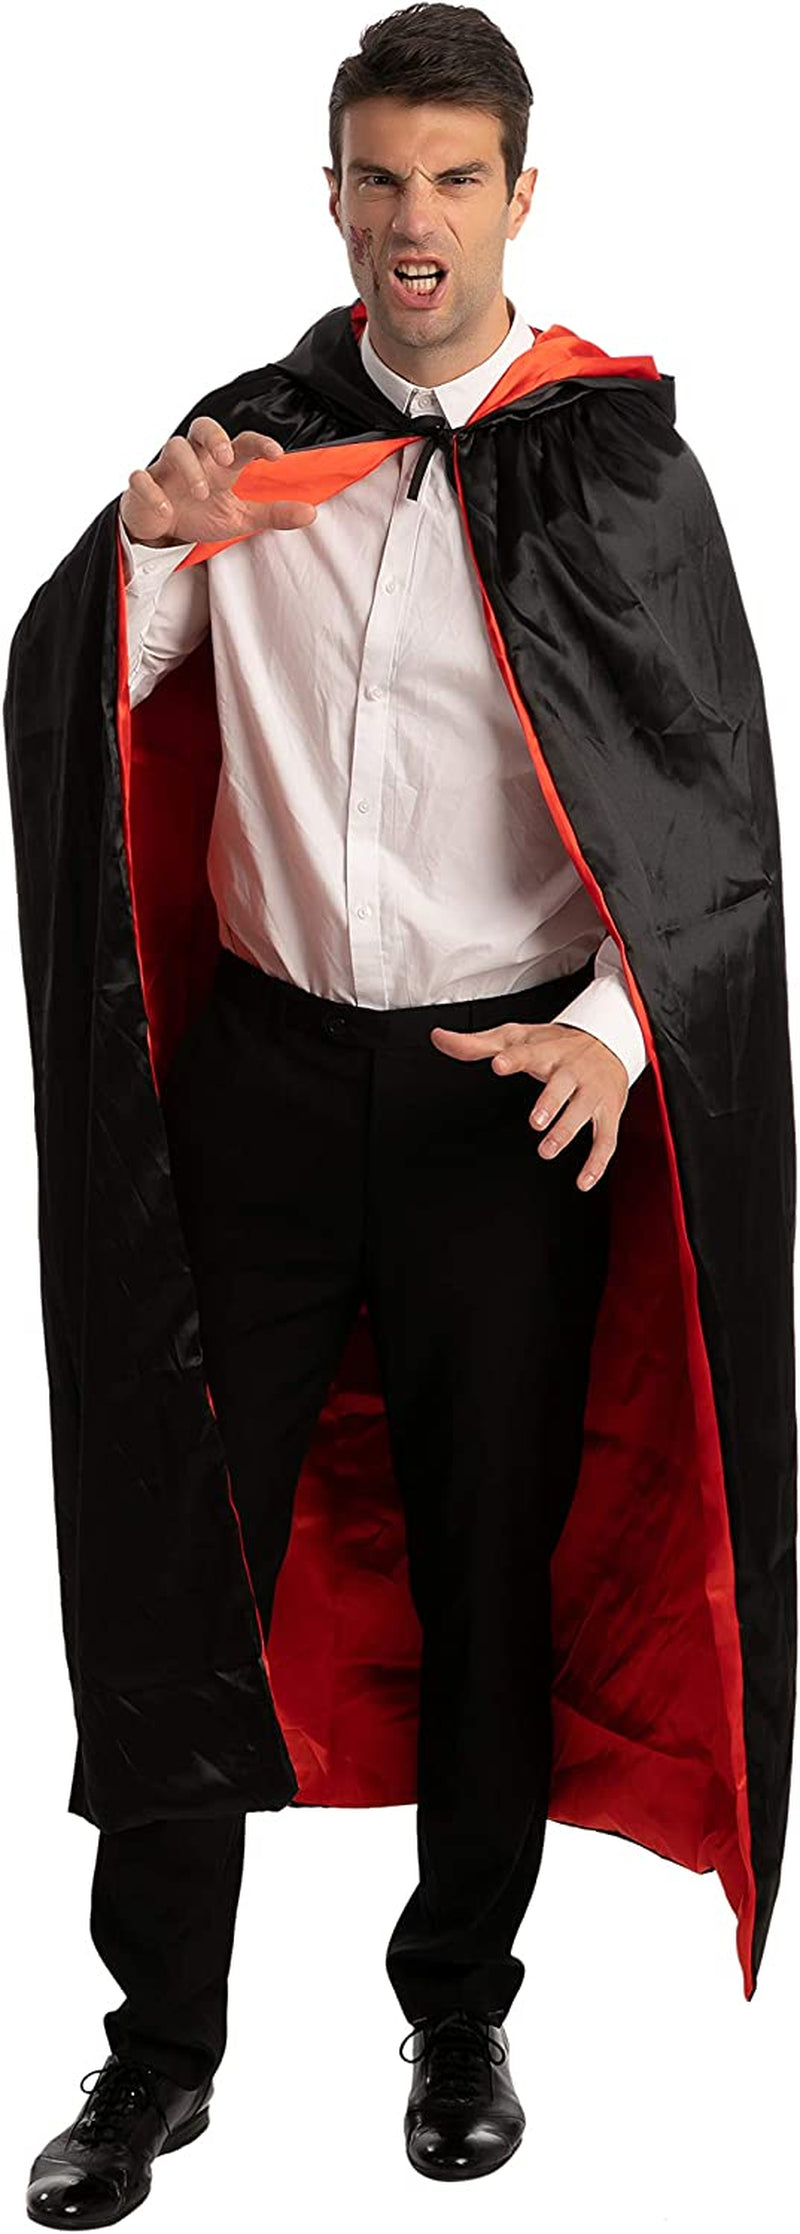 JOYIN Adult Unisex Vampire Costume Set with Reversible Hooded Cape Cloak and Tattoo Scar for Halloween Costume Party, Dracula Theme Party and Transylvania Costume  Joyin Inc.   